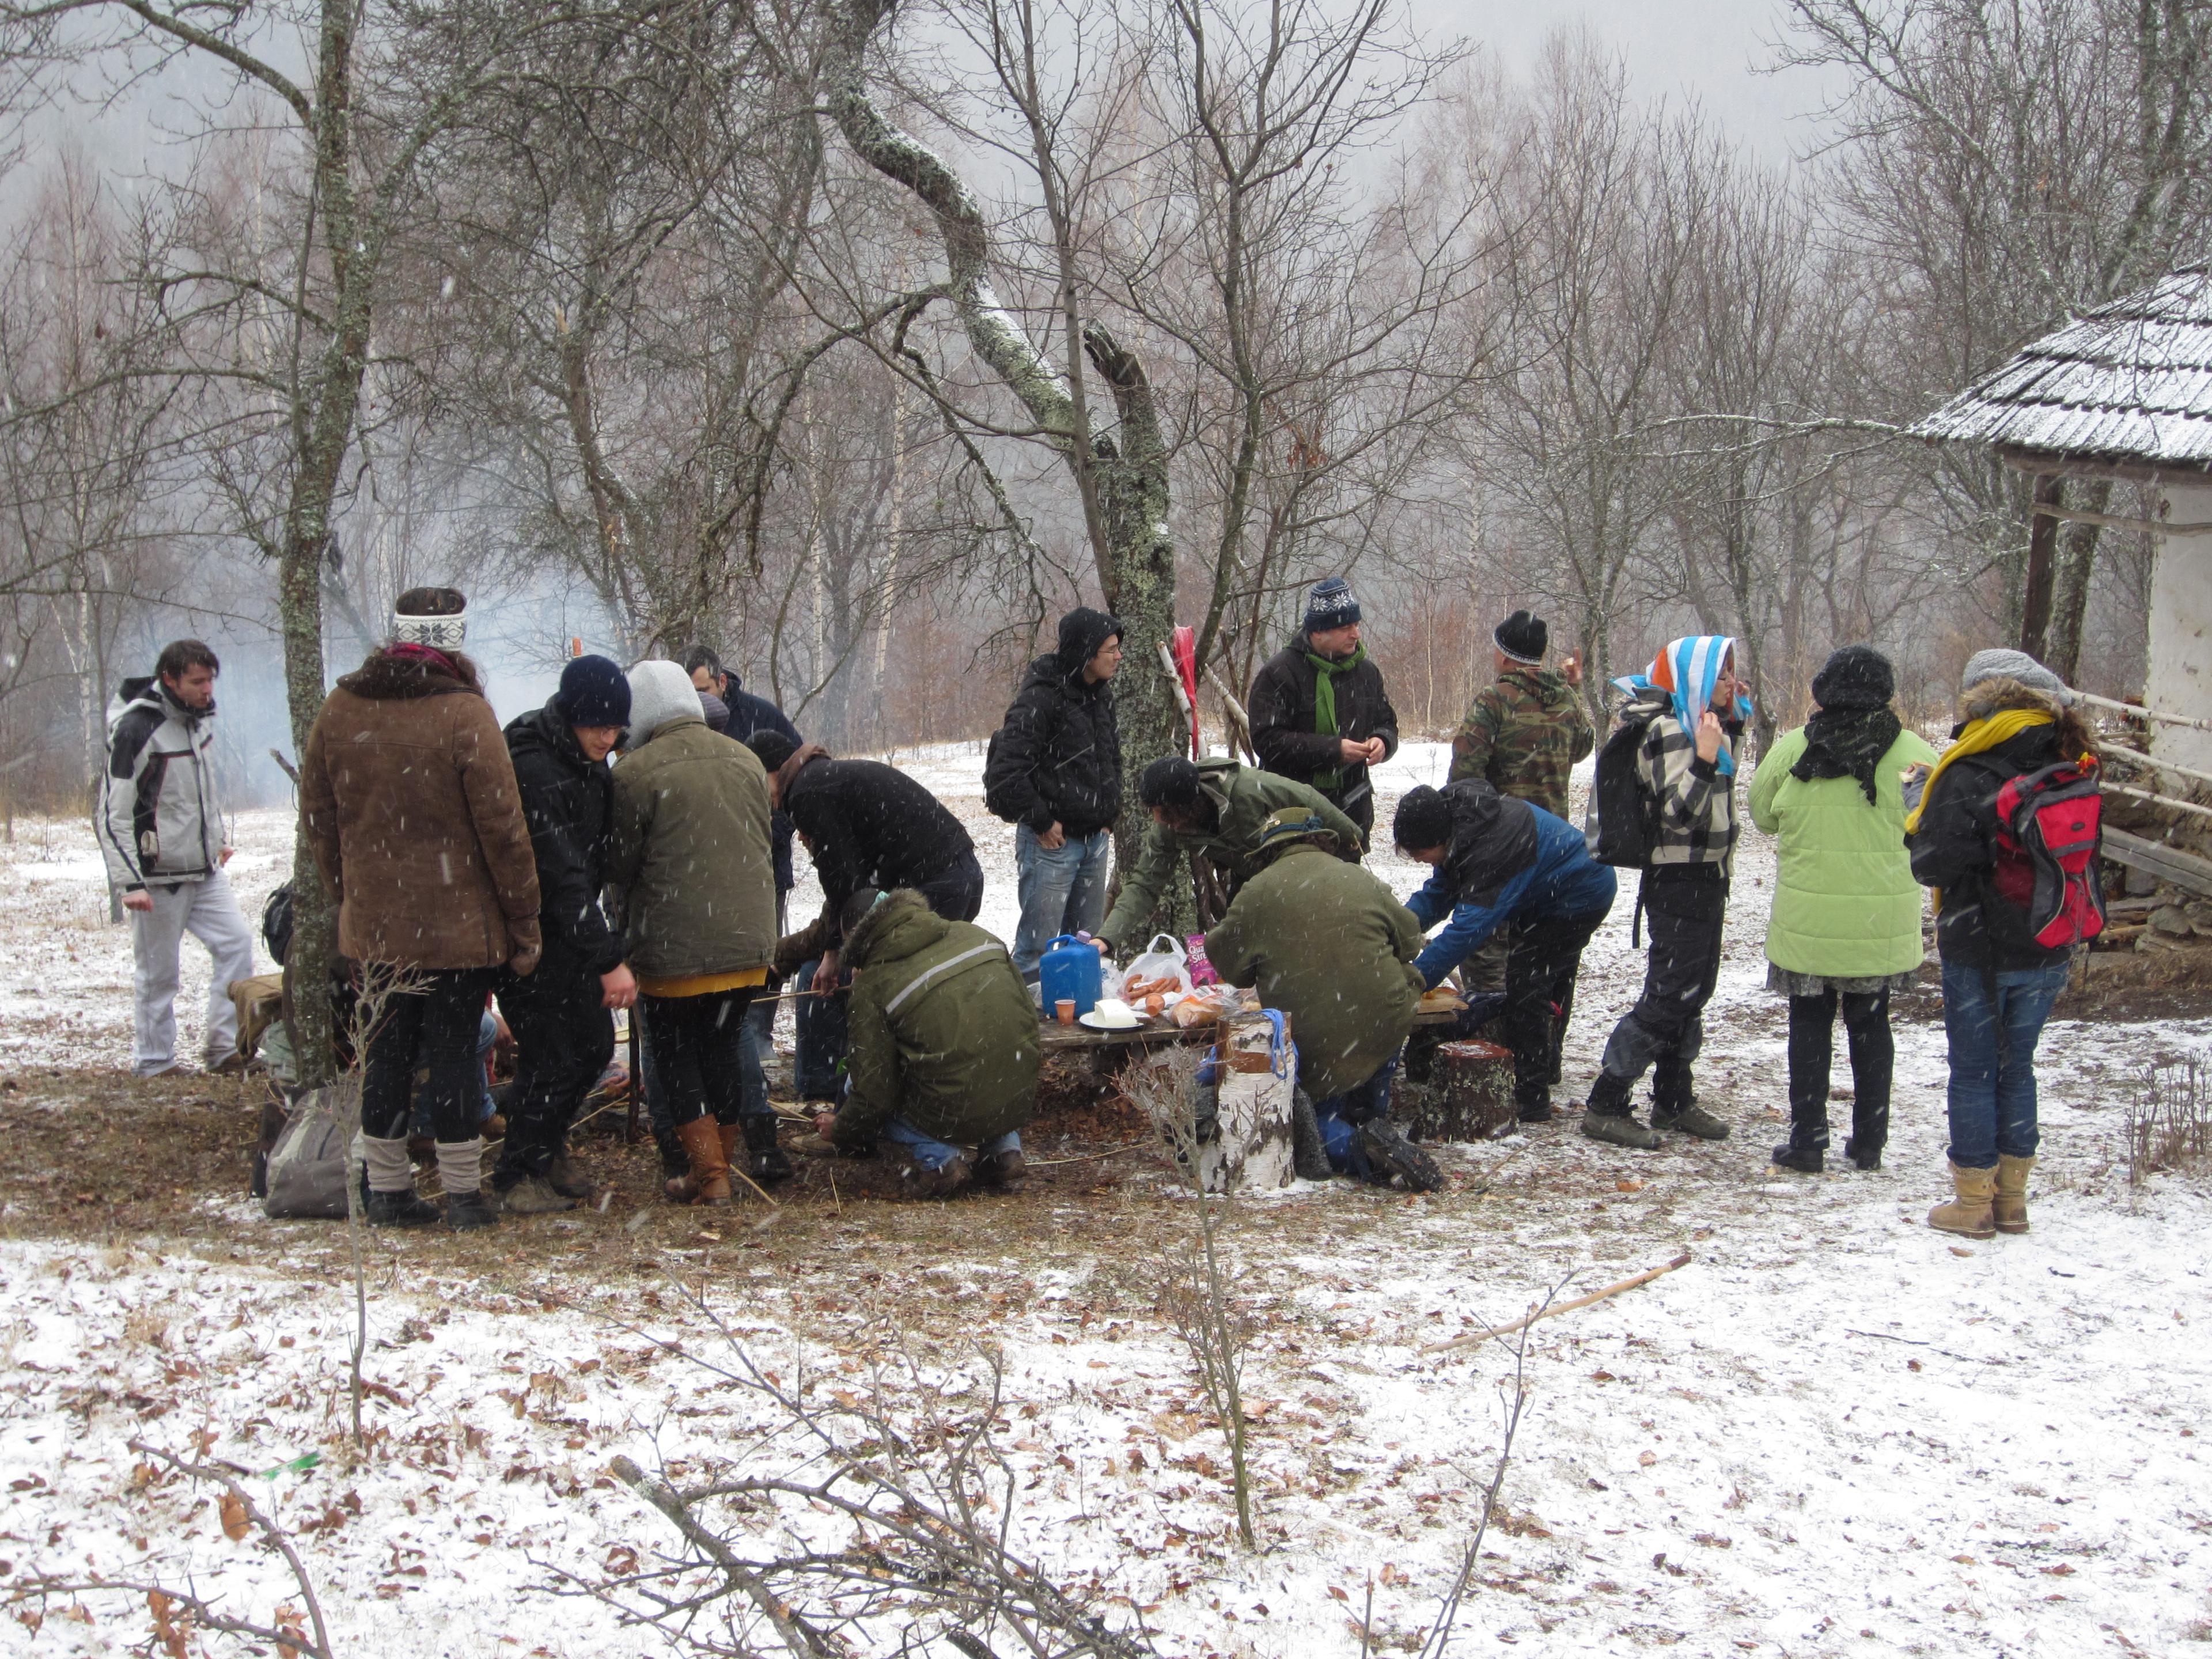 Group of people outdoors preparing food while it is snowing